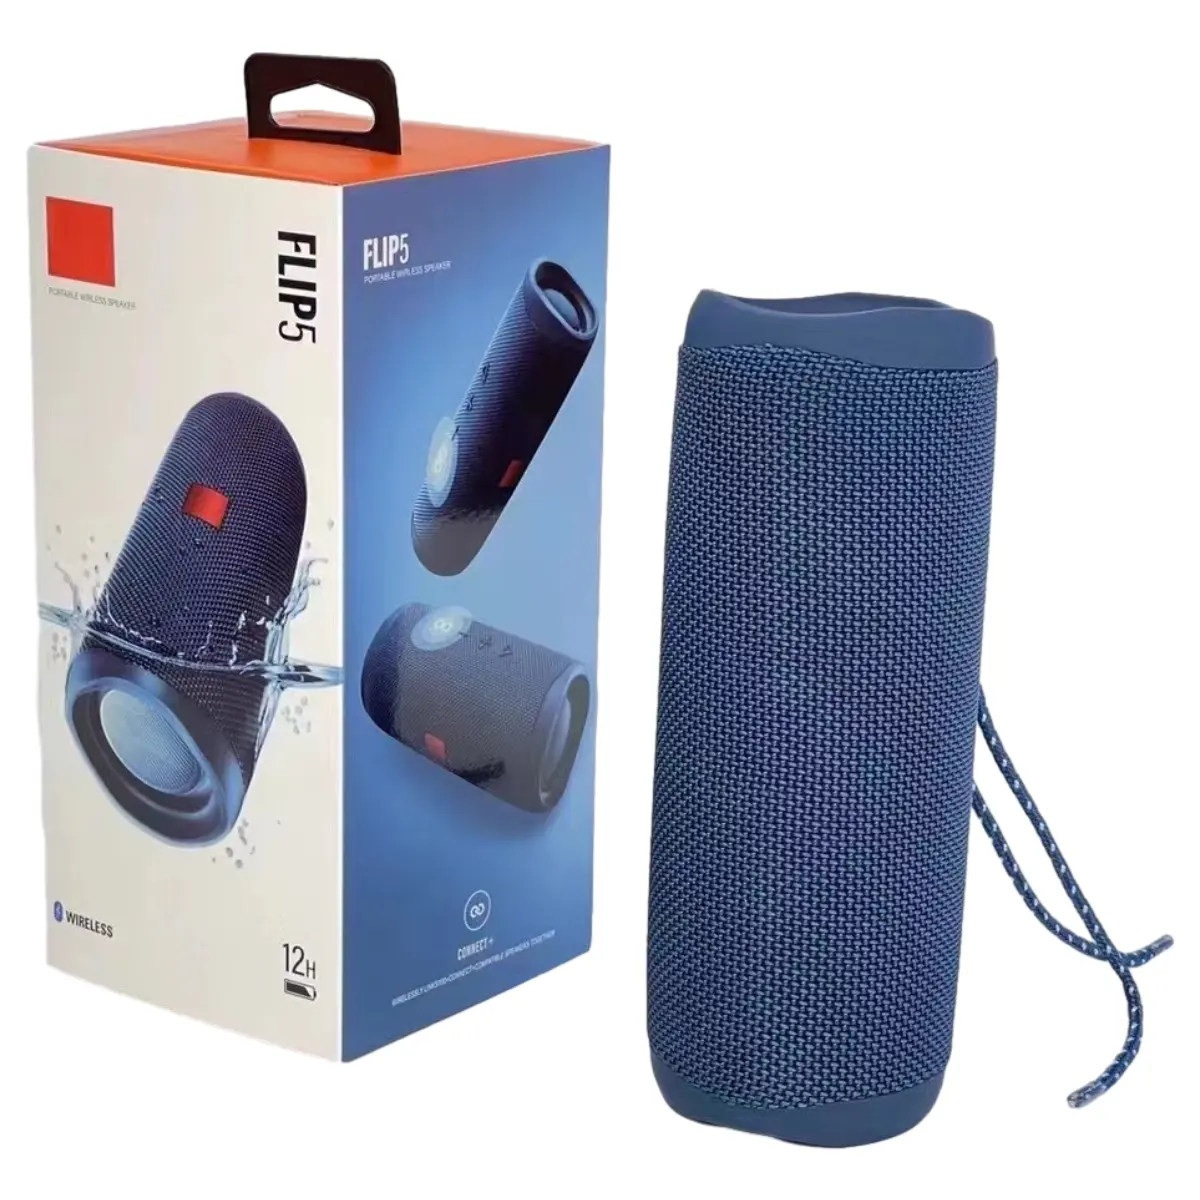 Flip 5 Powerful Wireless Speaker Audio Subwoofer Mini Portable Wireless Waterproof Partybox Music Boombox BT Speaker